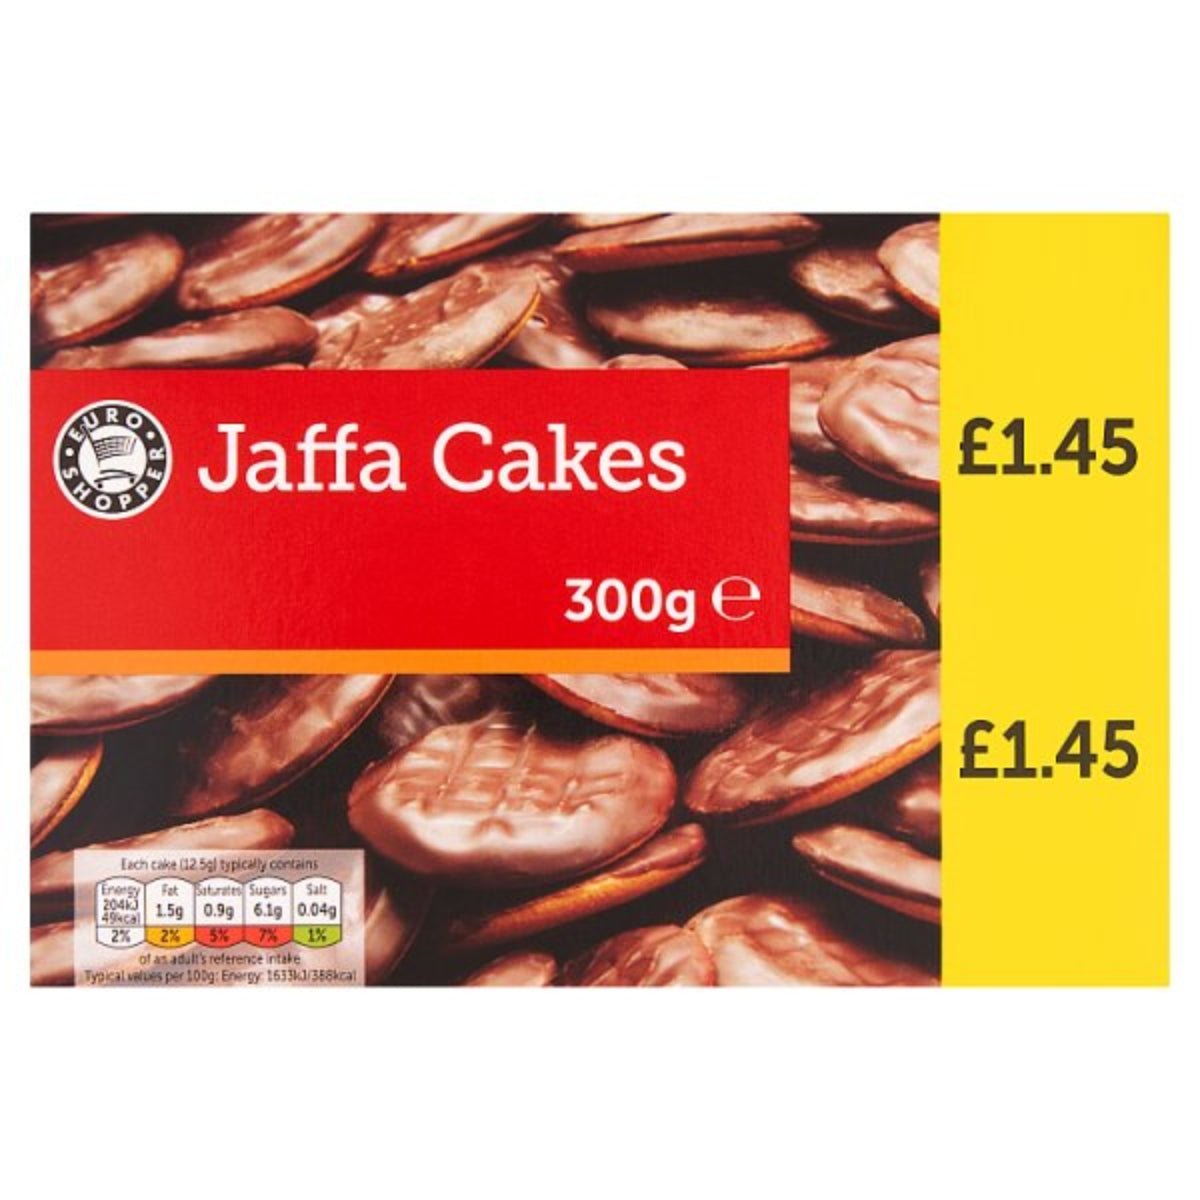 A box of Euro Shopper - Jaffa Cakes - 300g on a white background.